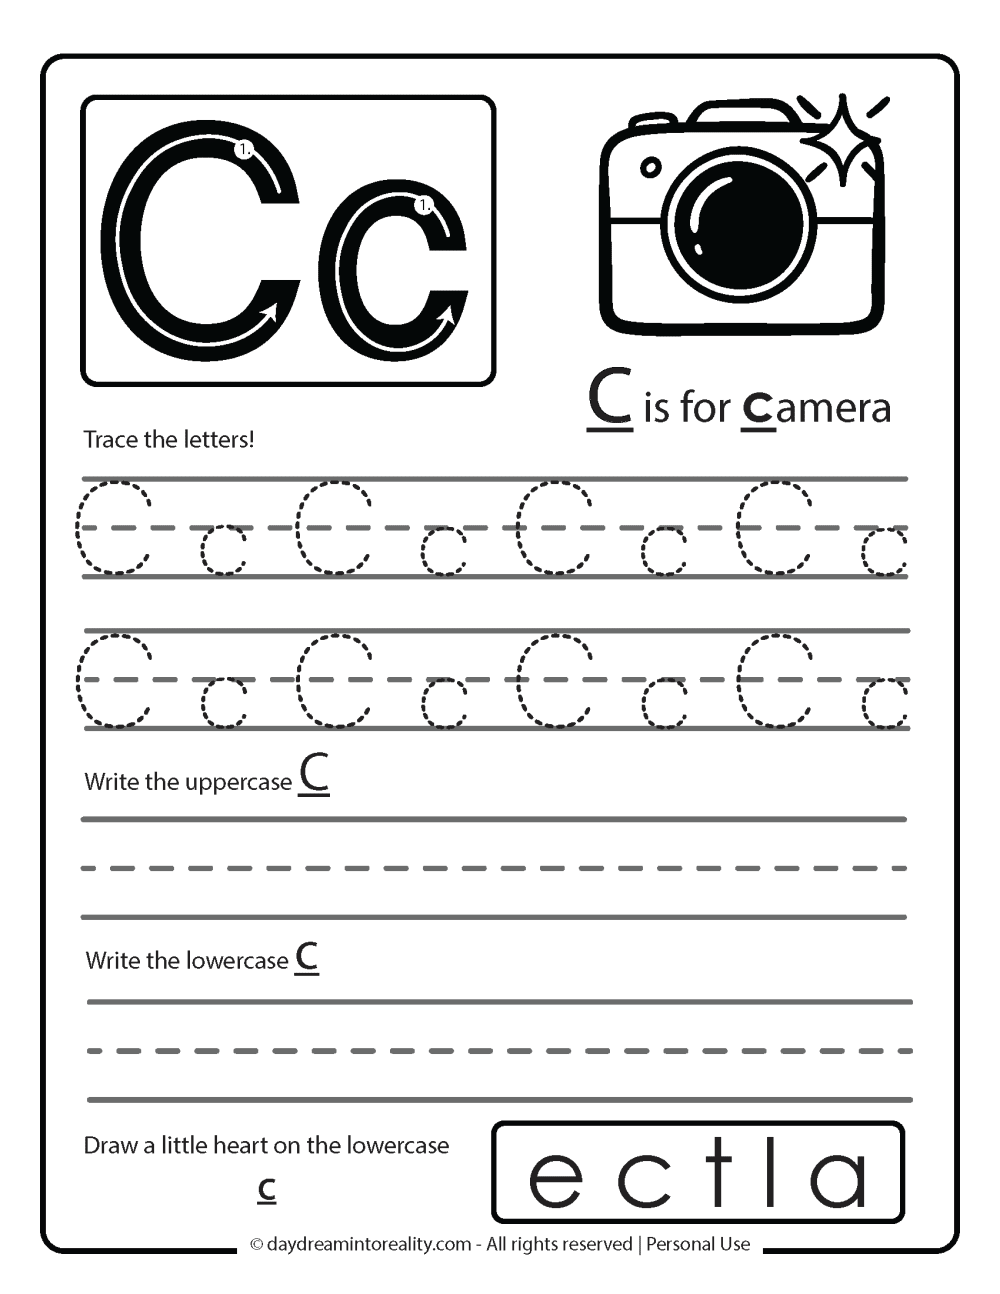 Letter C worksheet free printable - c is for camera